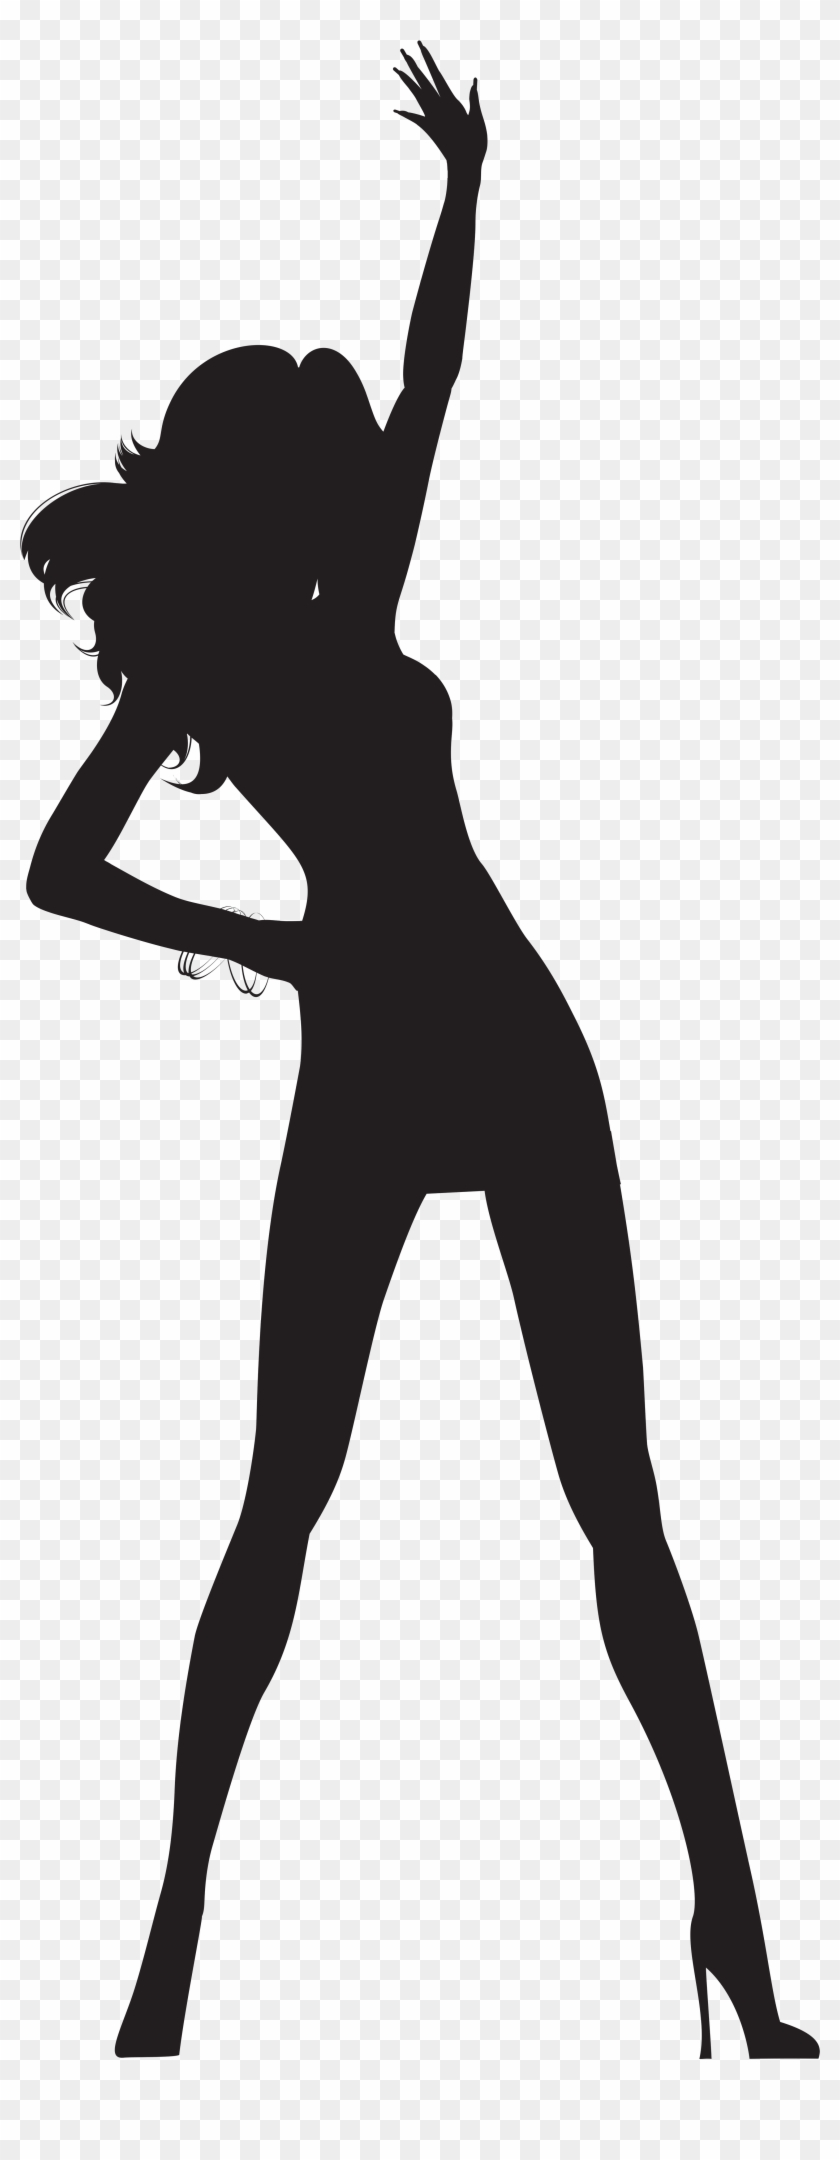 Dancing Woman Silhouette Png Transparent Clip Art Image - Dancer Silhouette Png Transparent Background #143699